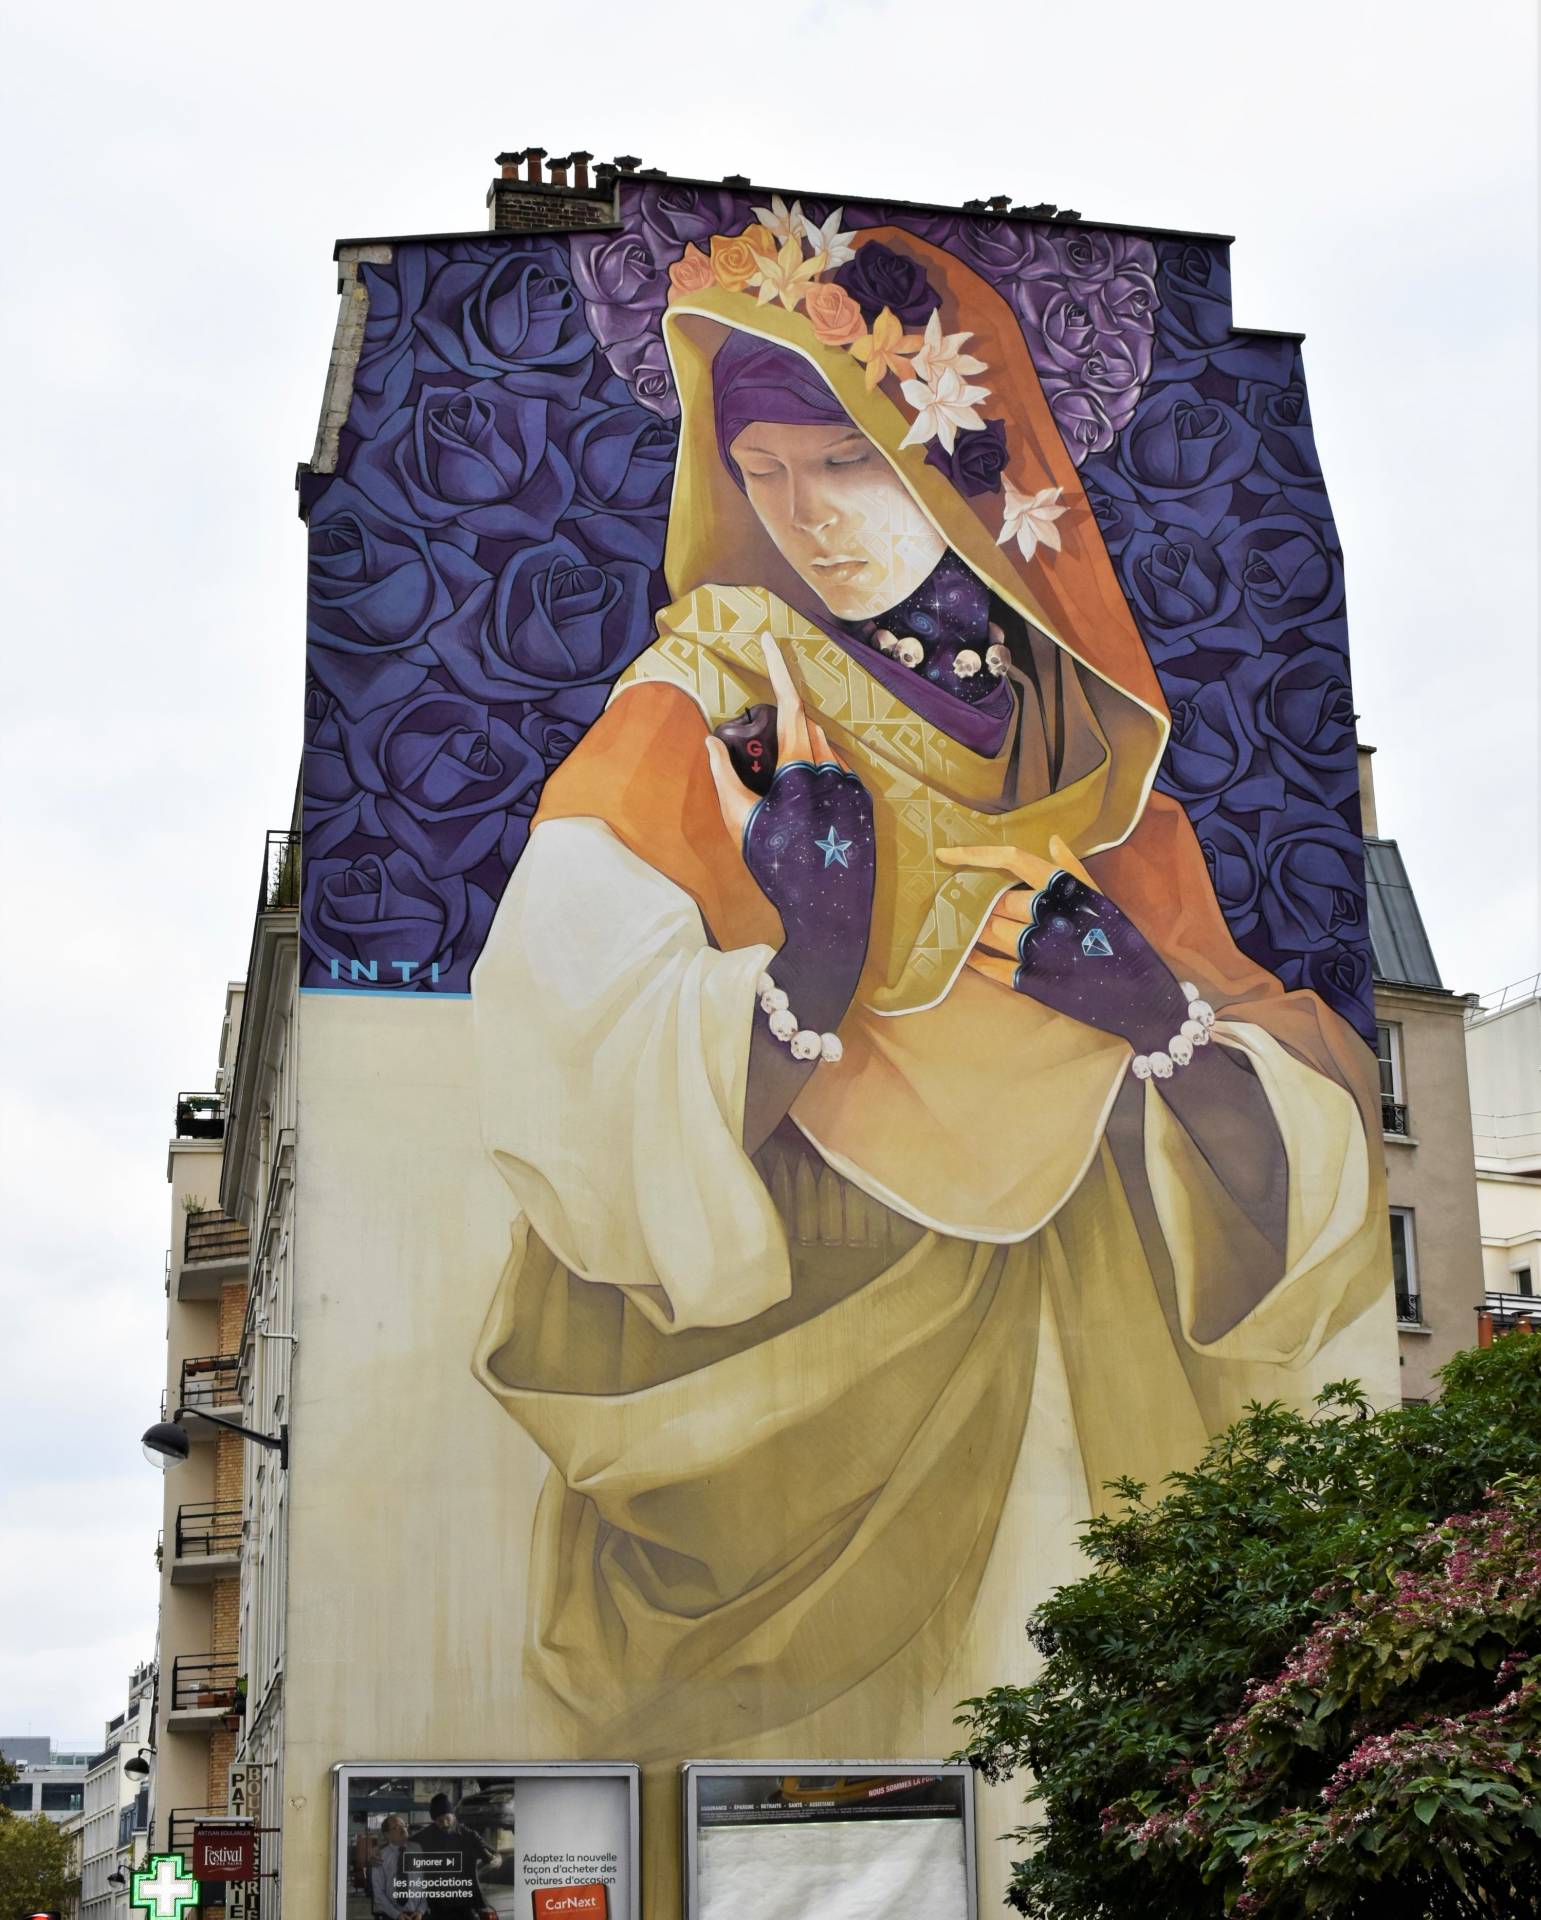 inti - street art avenue - boulevard paris13 - paris